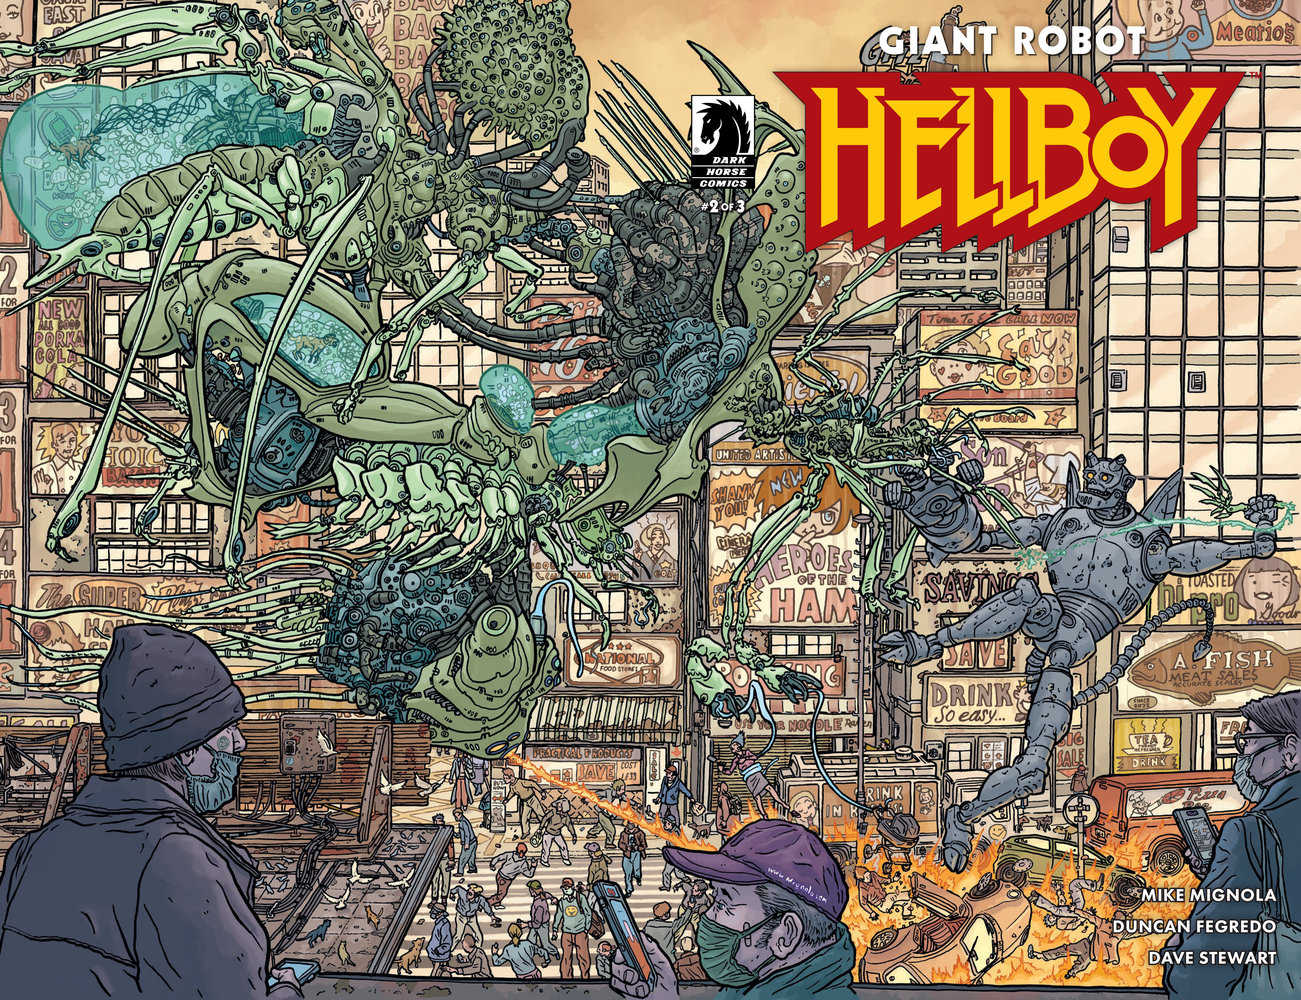 Giant Robot Hellboy #2 (Cover B) (Wraparound) (Geof Darrow) | Game Master's Emporium (The New GME)